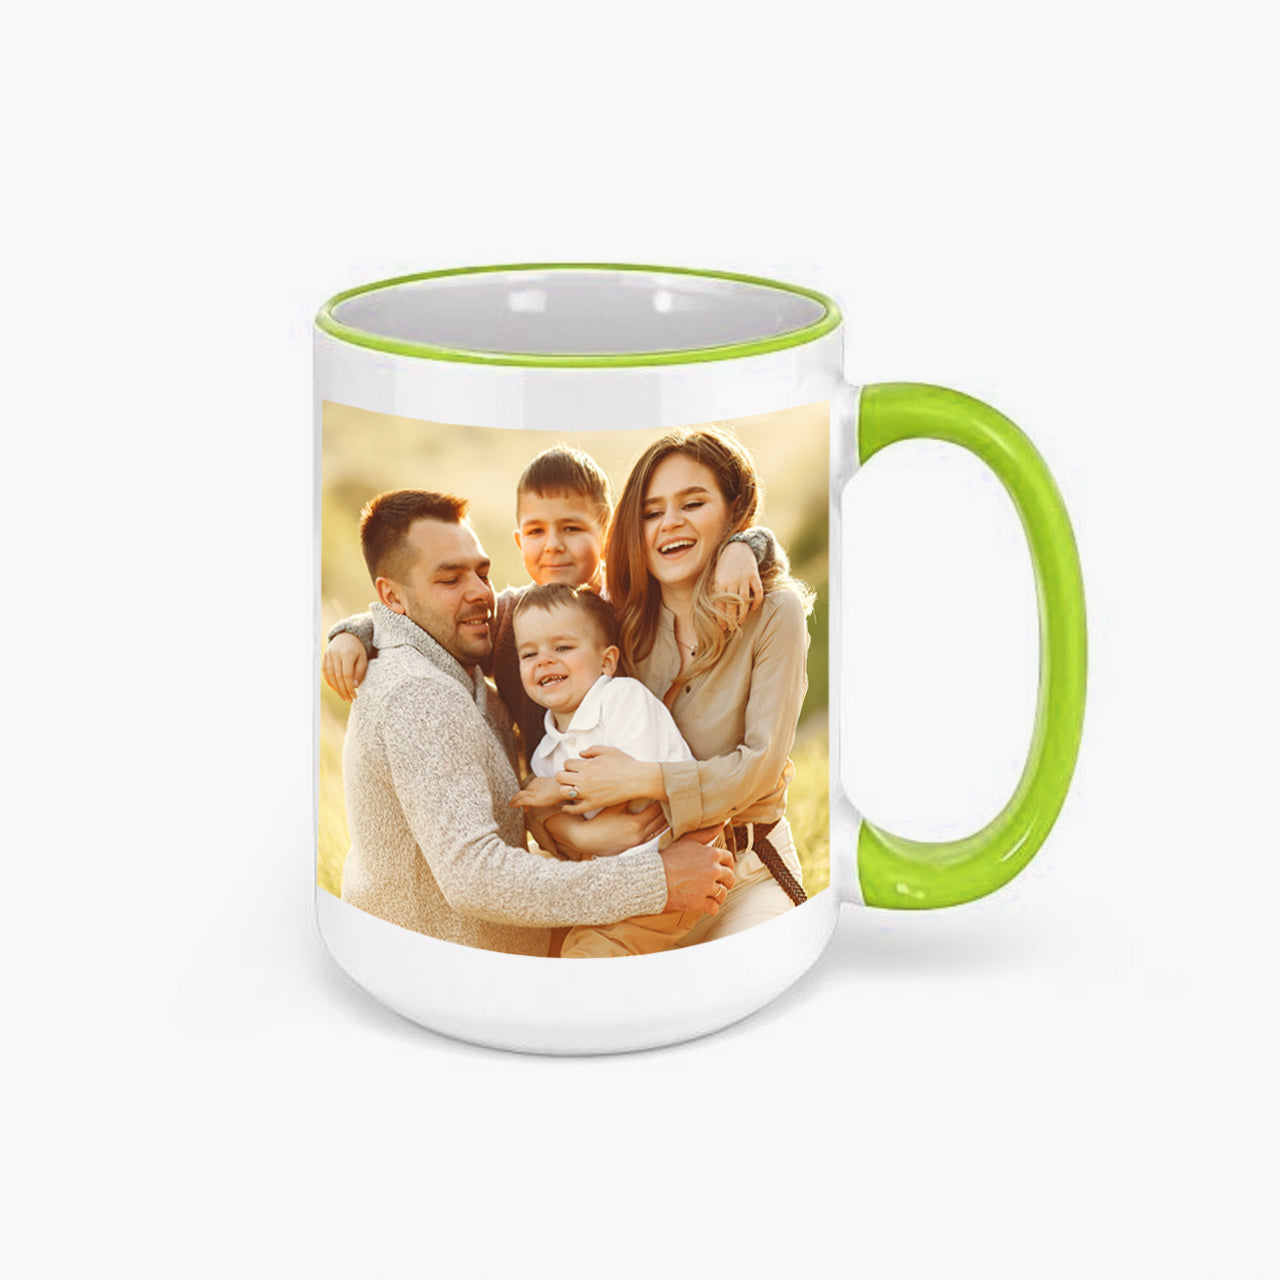 15oz-personalized-light-blue-rim-handle-coffee-mug-with-custom-photo-text